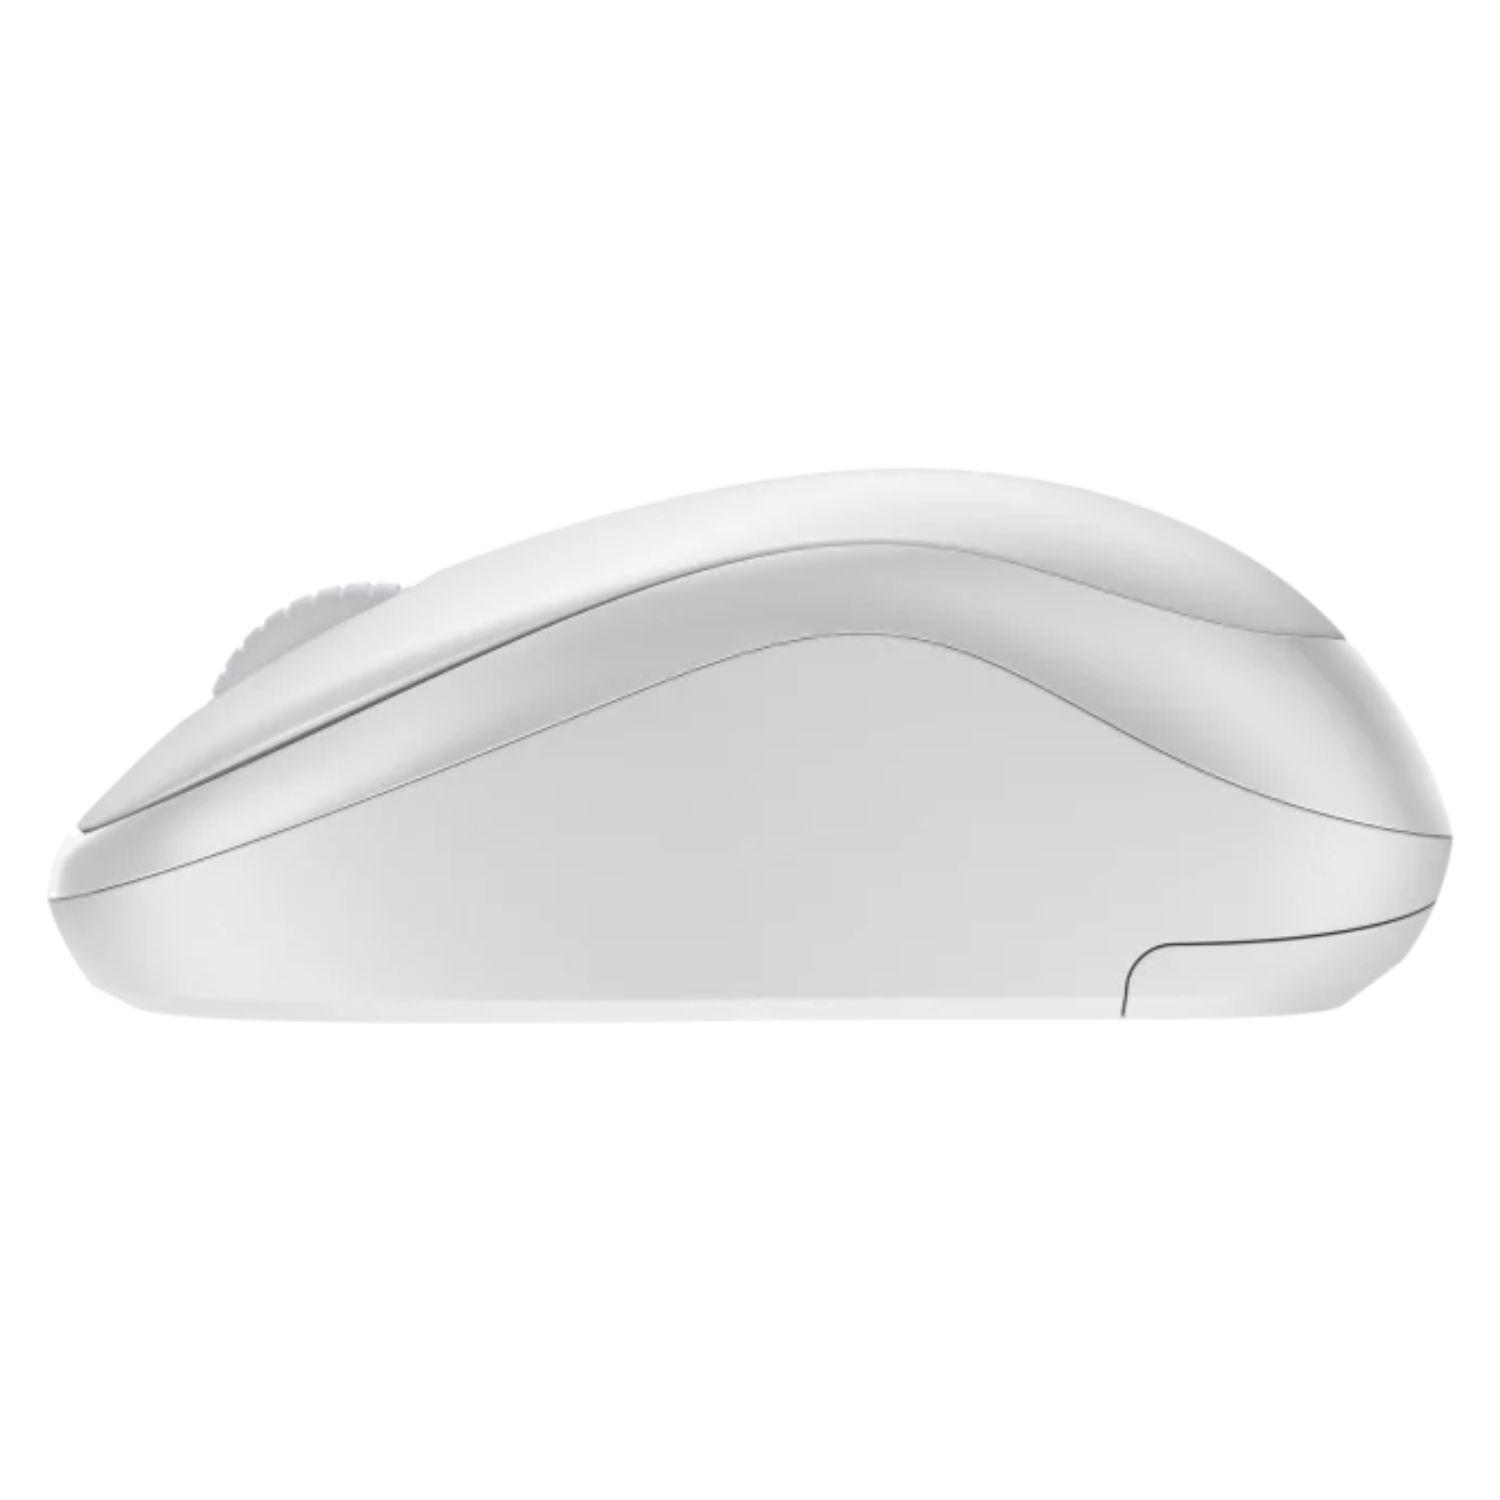 Mouse Logitech Wireless M220 White